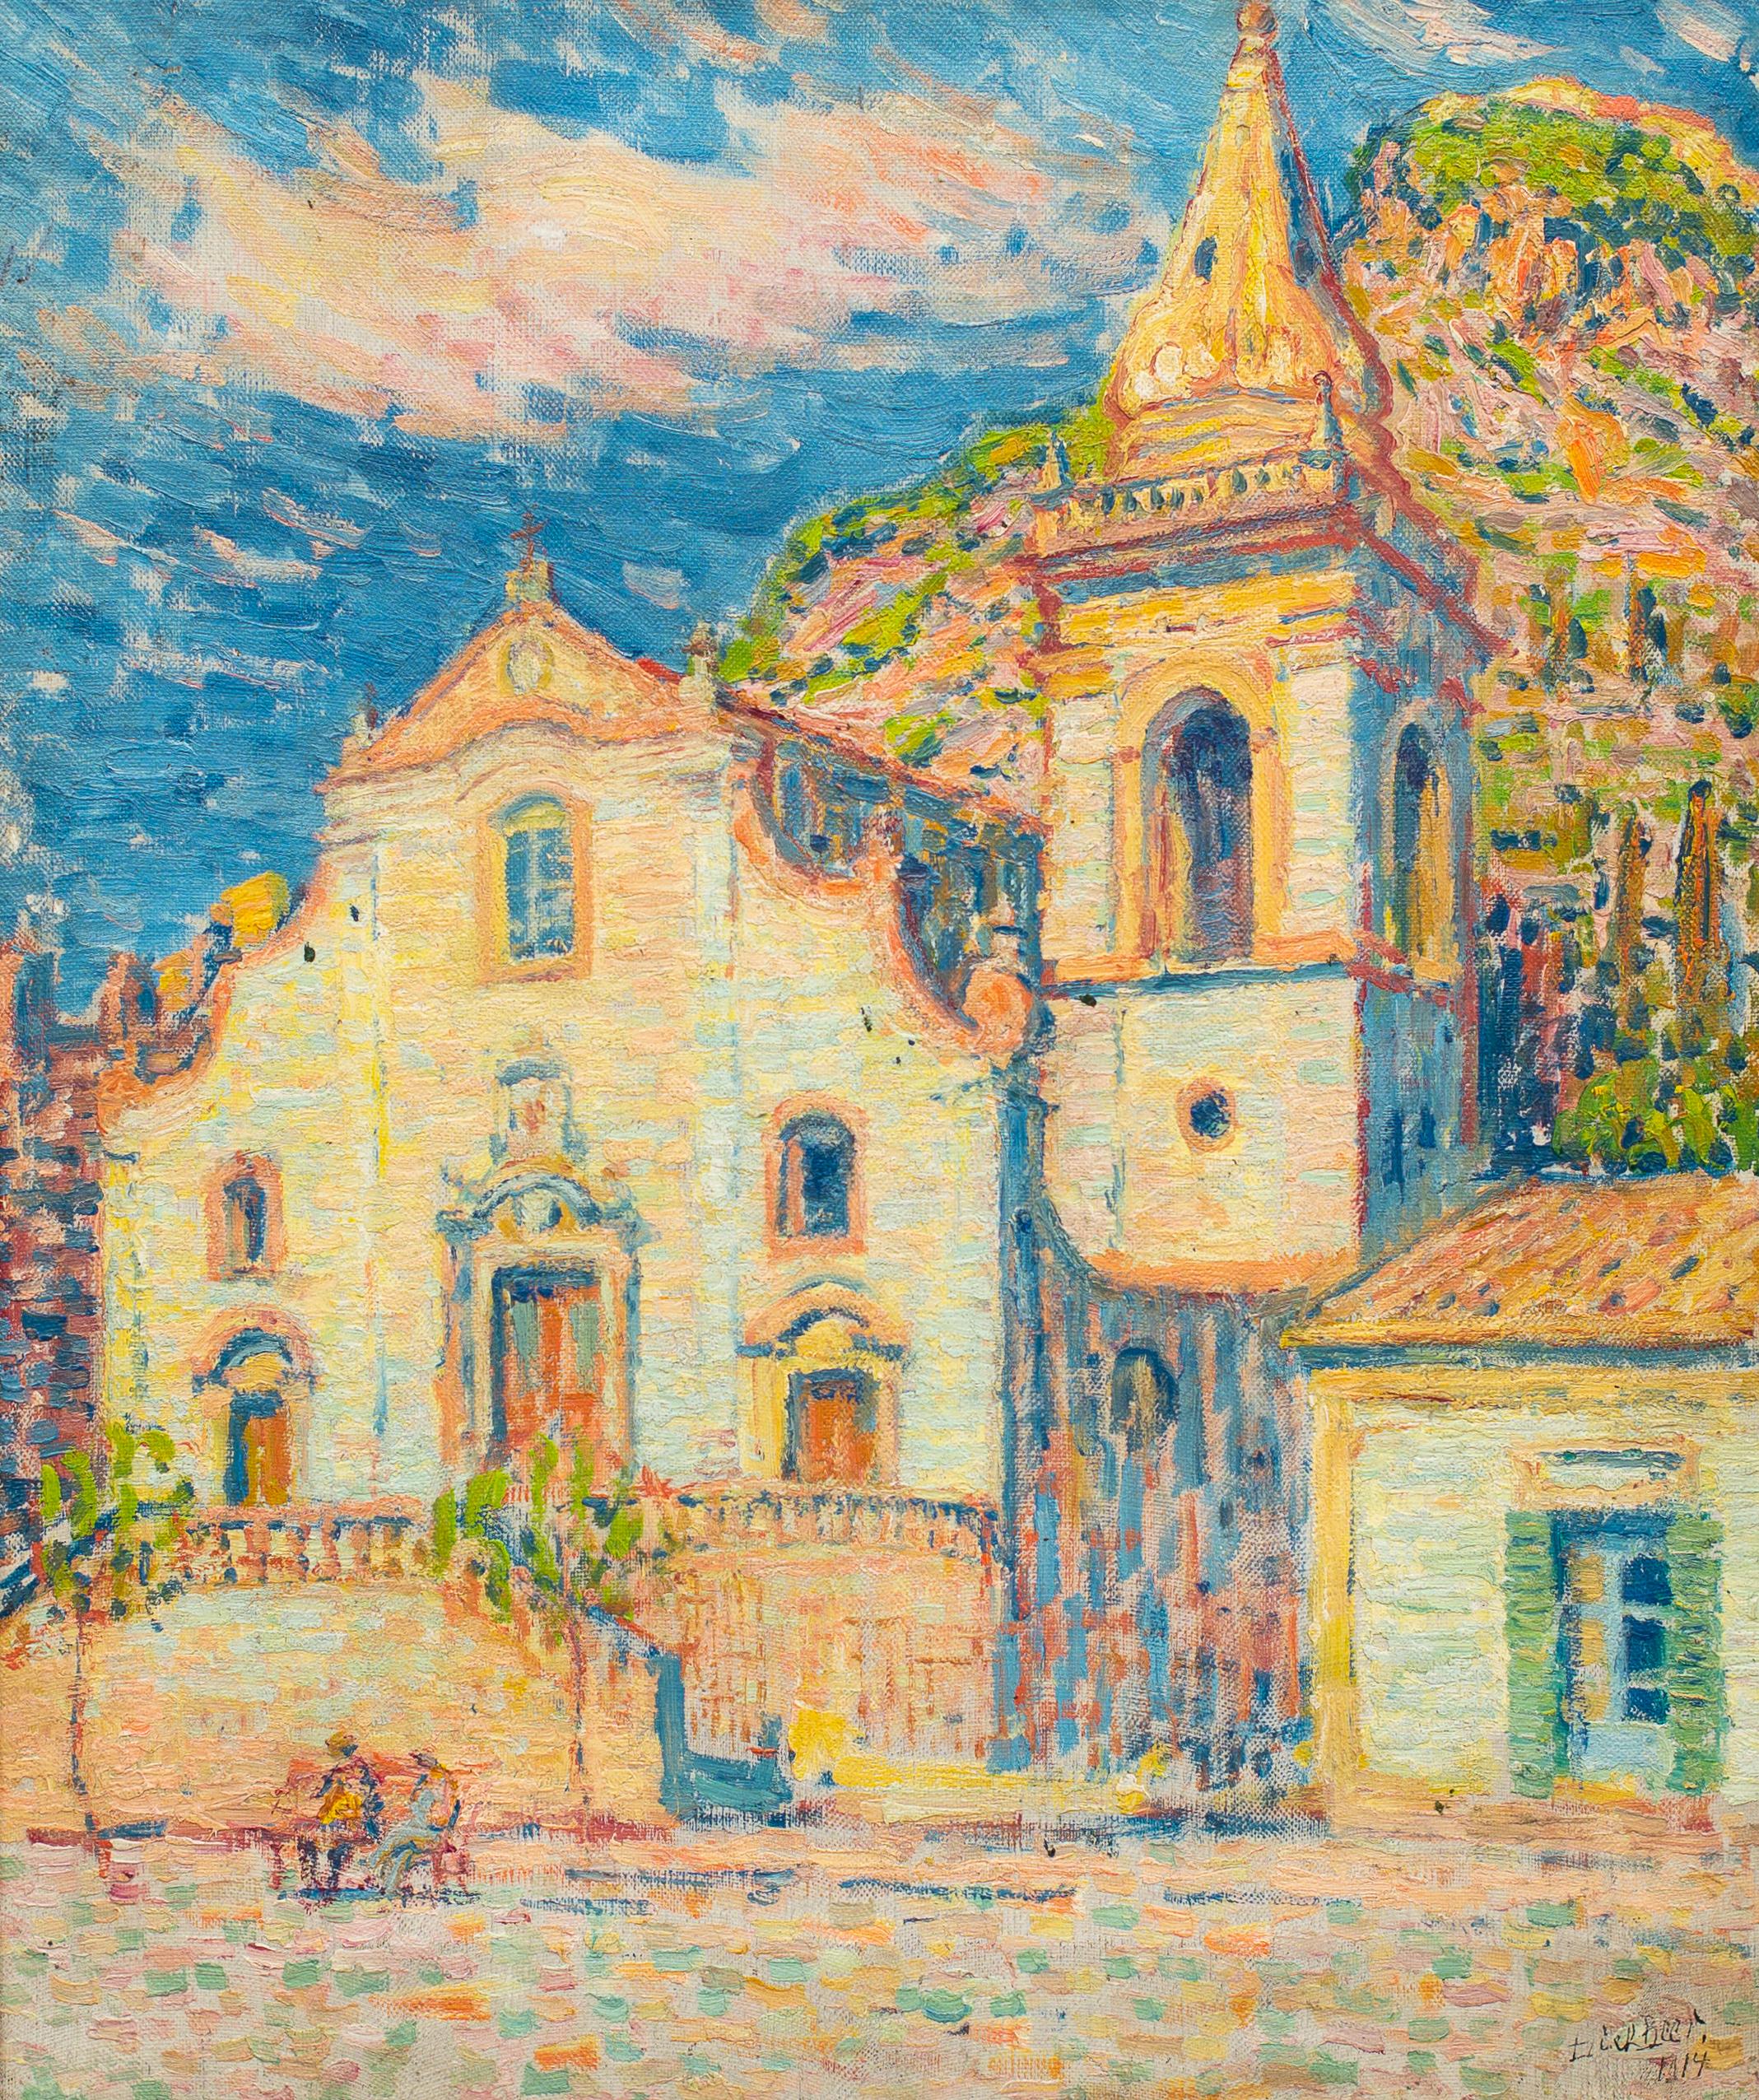 Figurative Painting Dick Beer - Peinture post-impressionniste - L'église de Taormina, Sicile, 1914